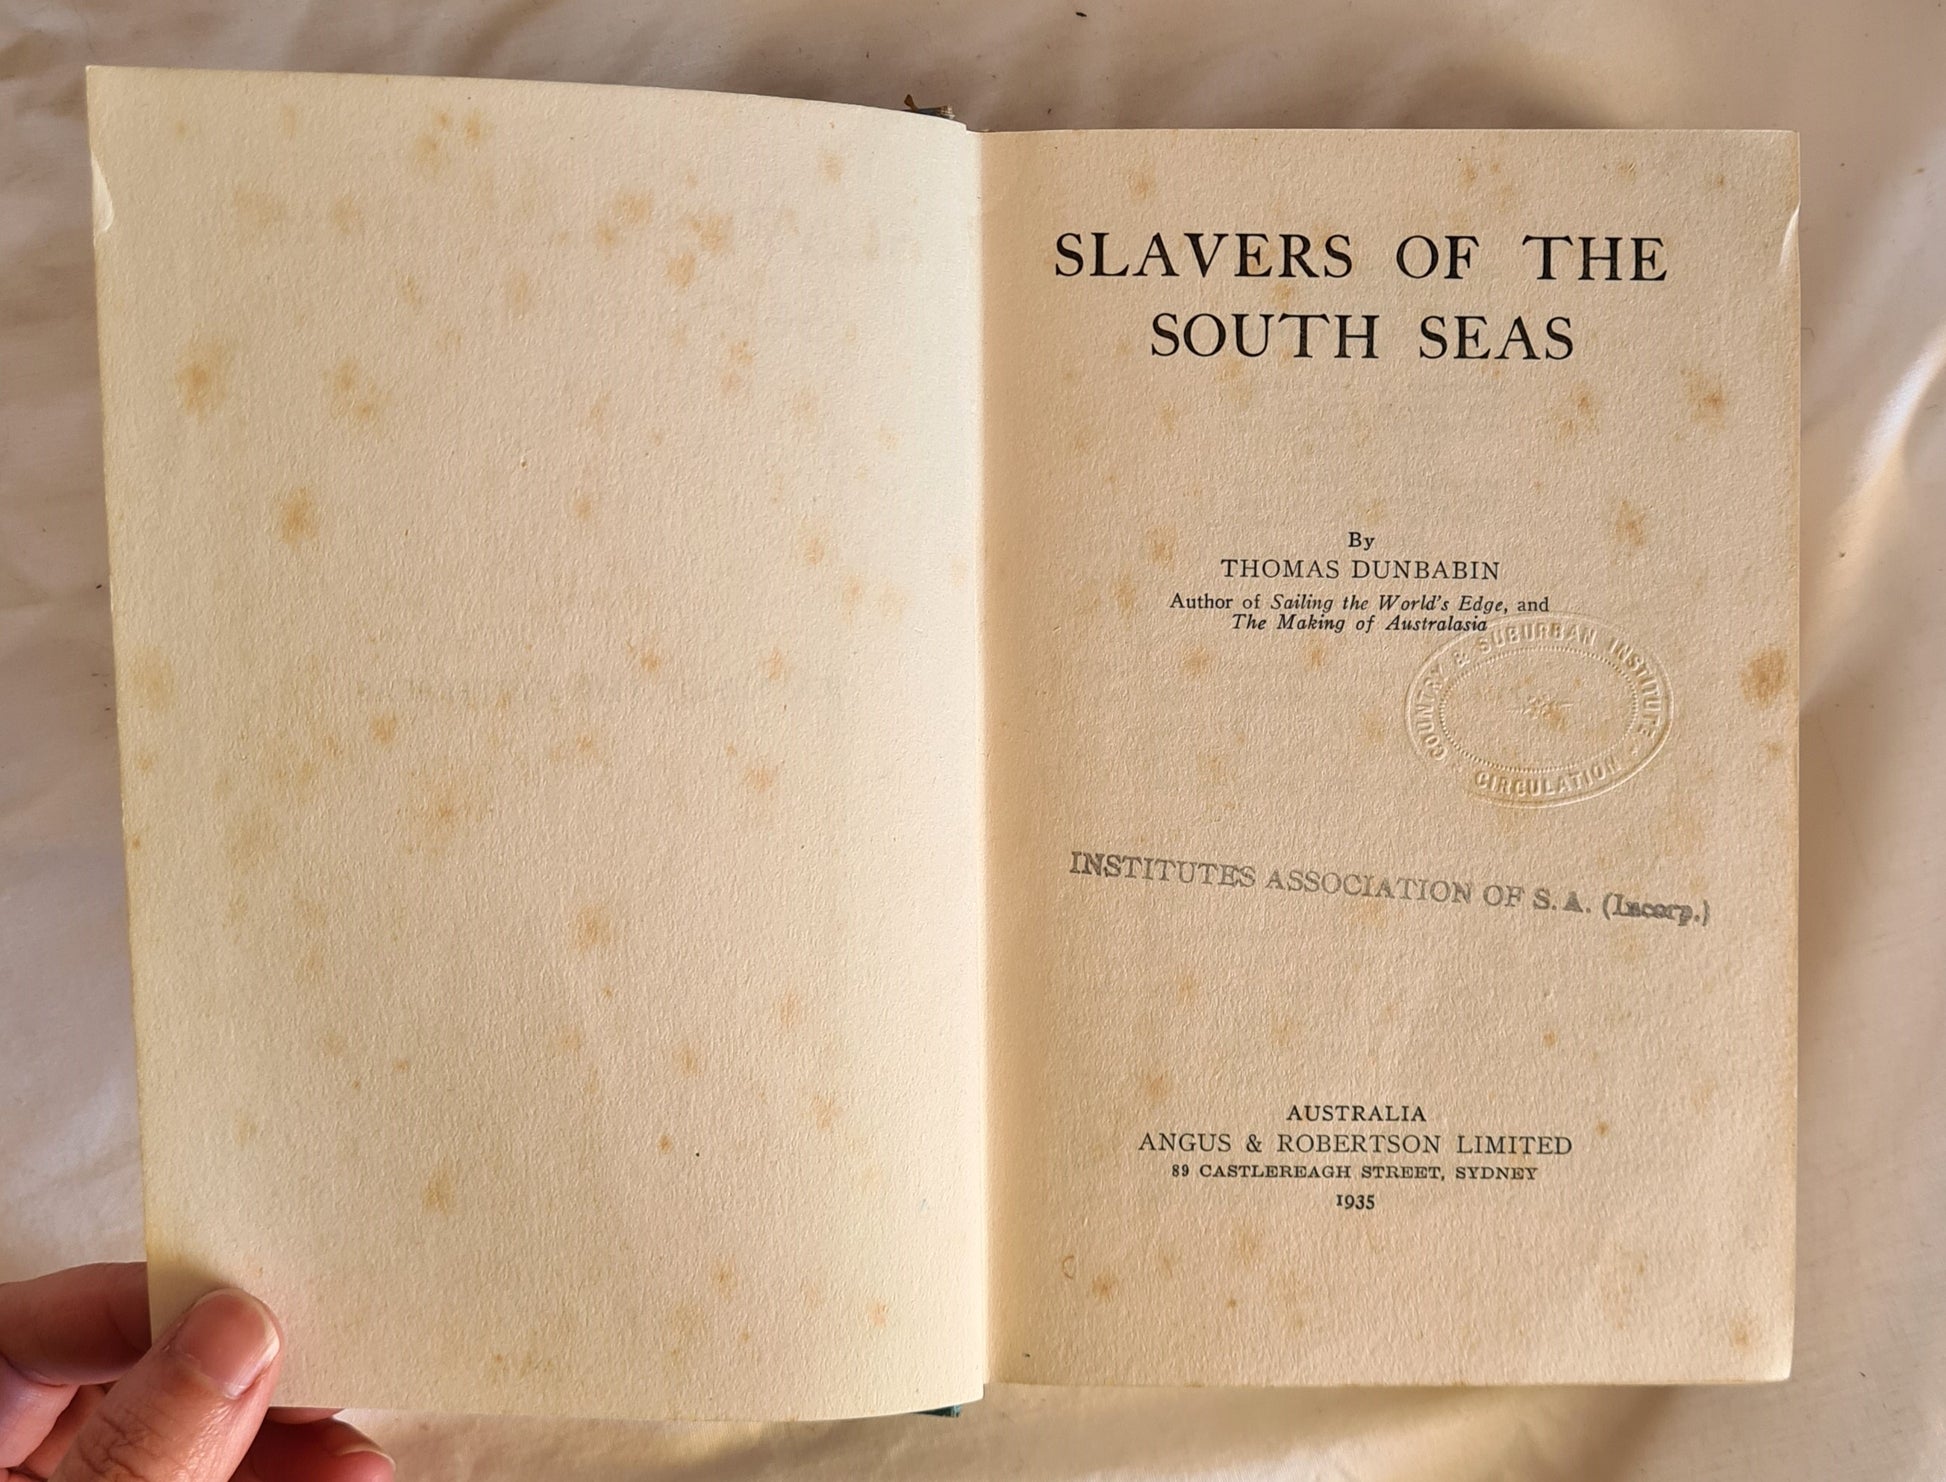 The Slavers of the South Seas  by Thomas Dunbabin